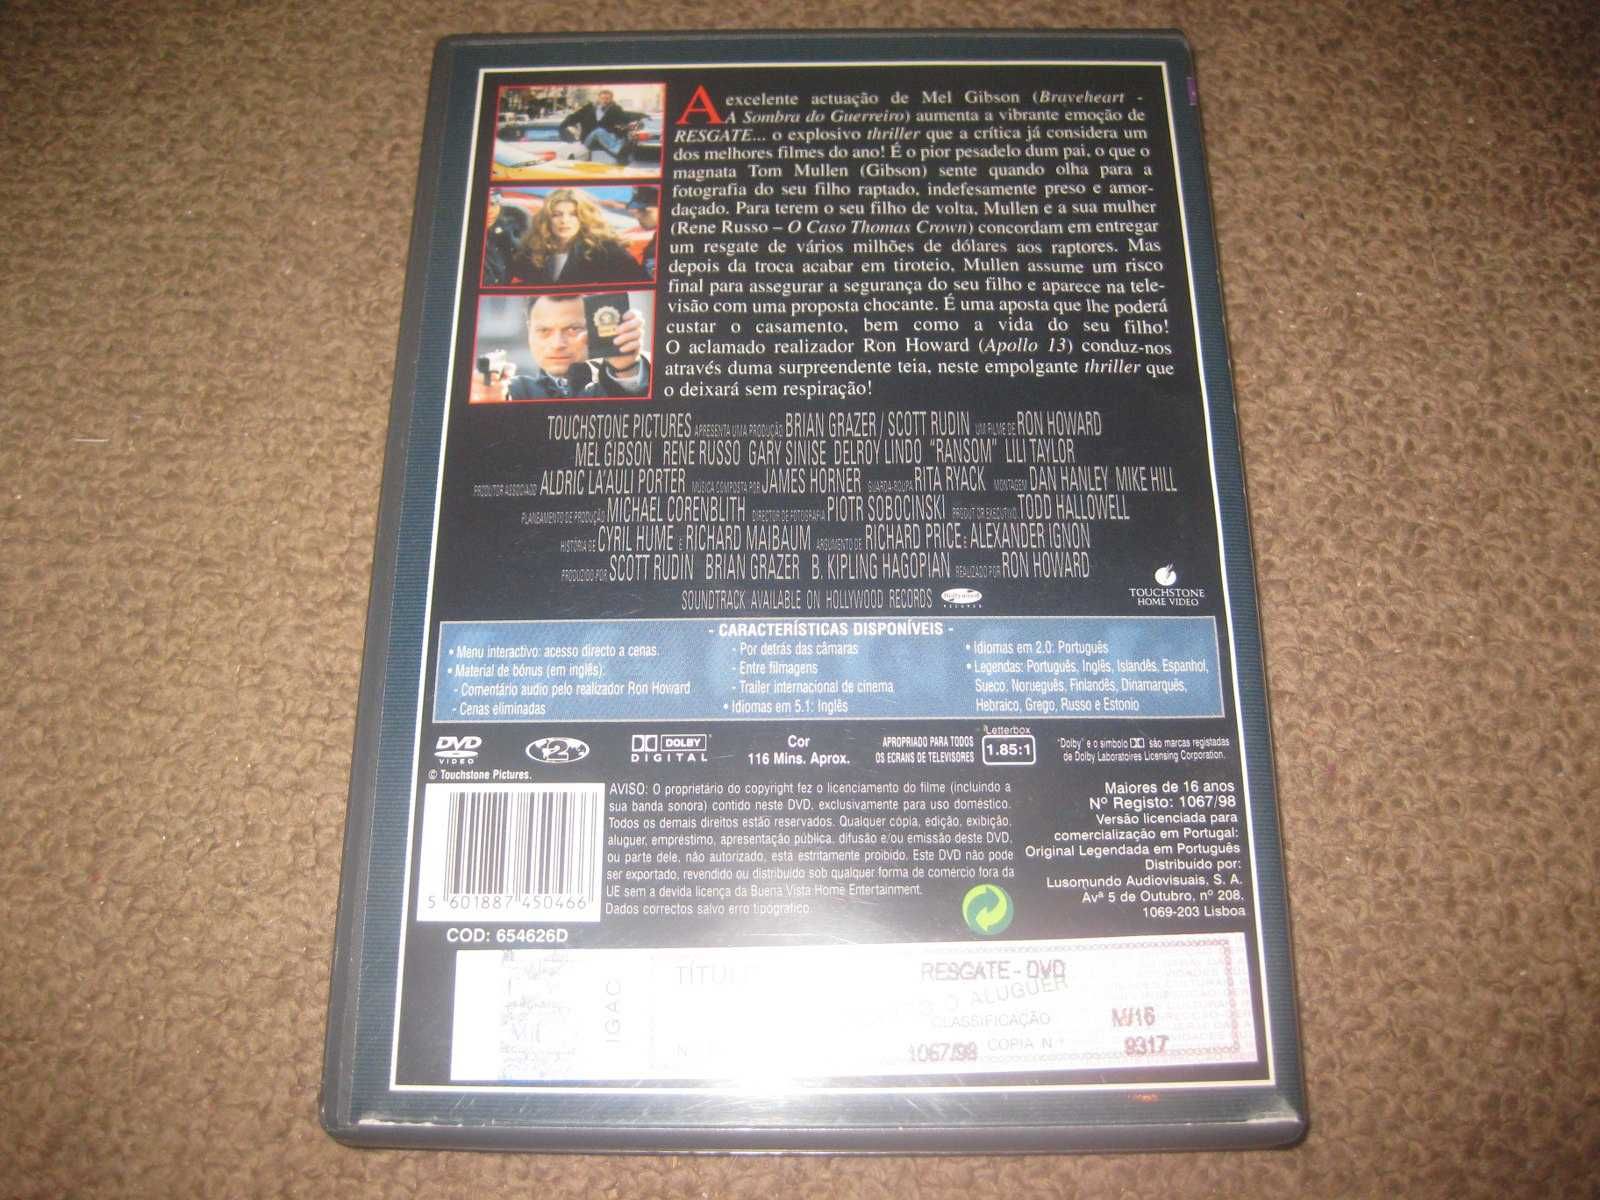 DVD "Resgate" com Mel Gibson